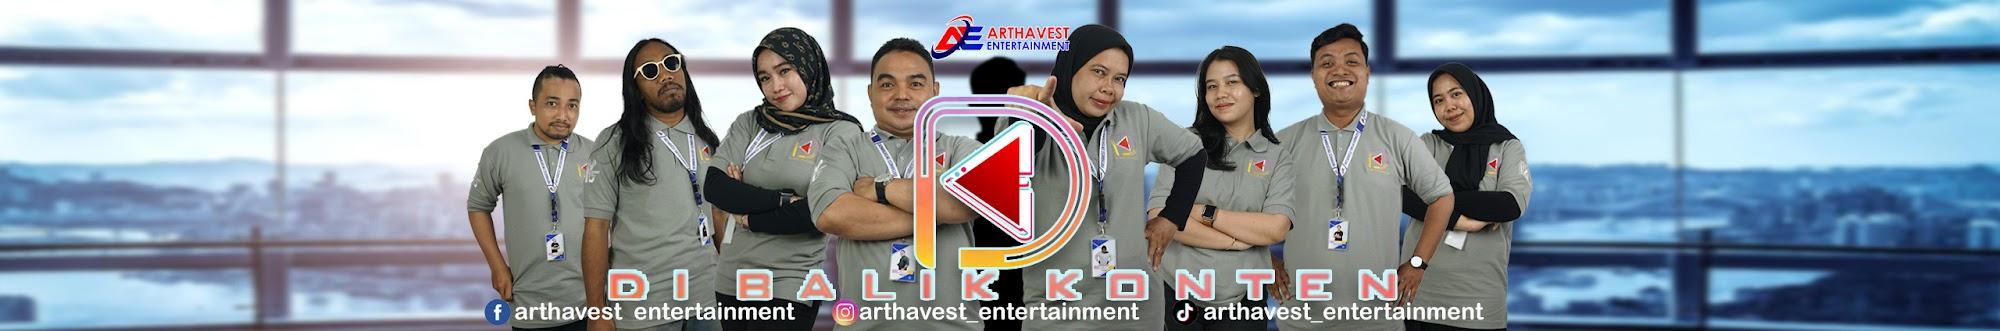 Arthavest Entertainment